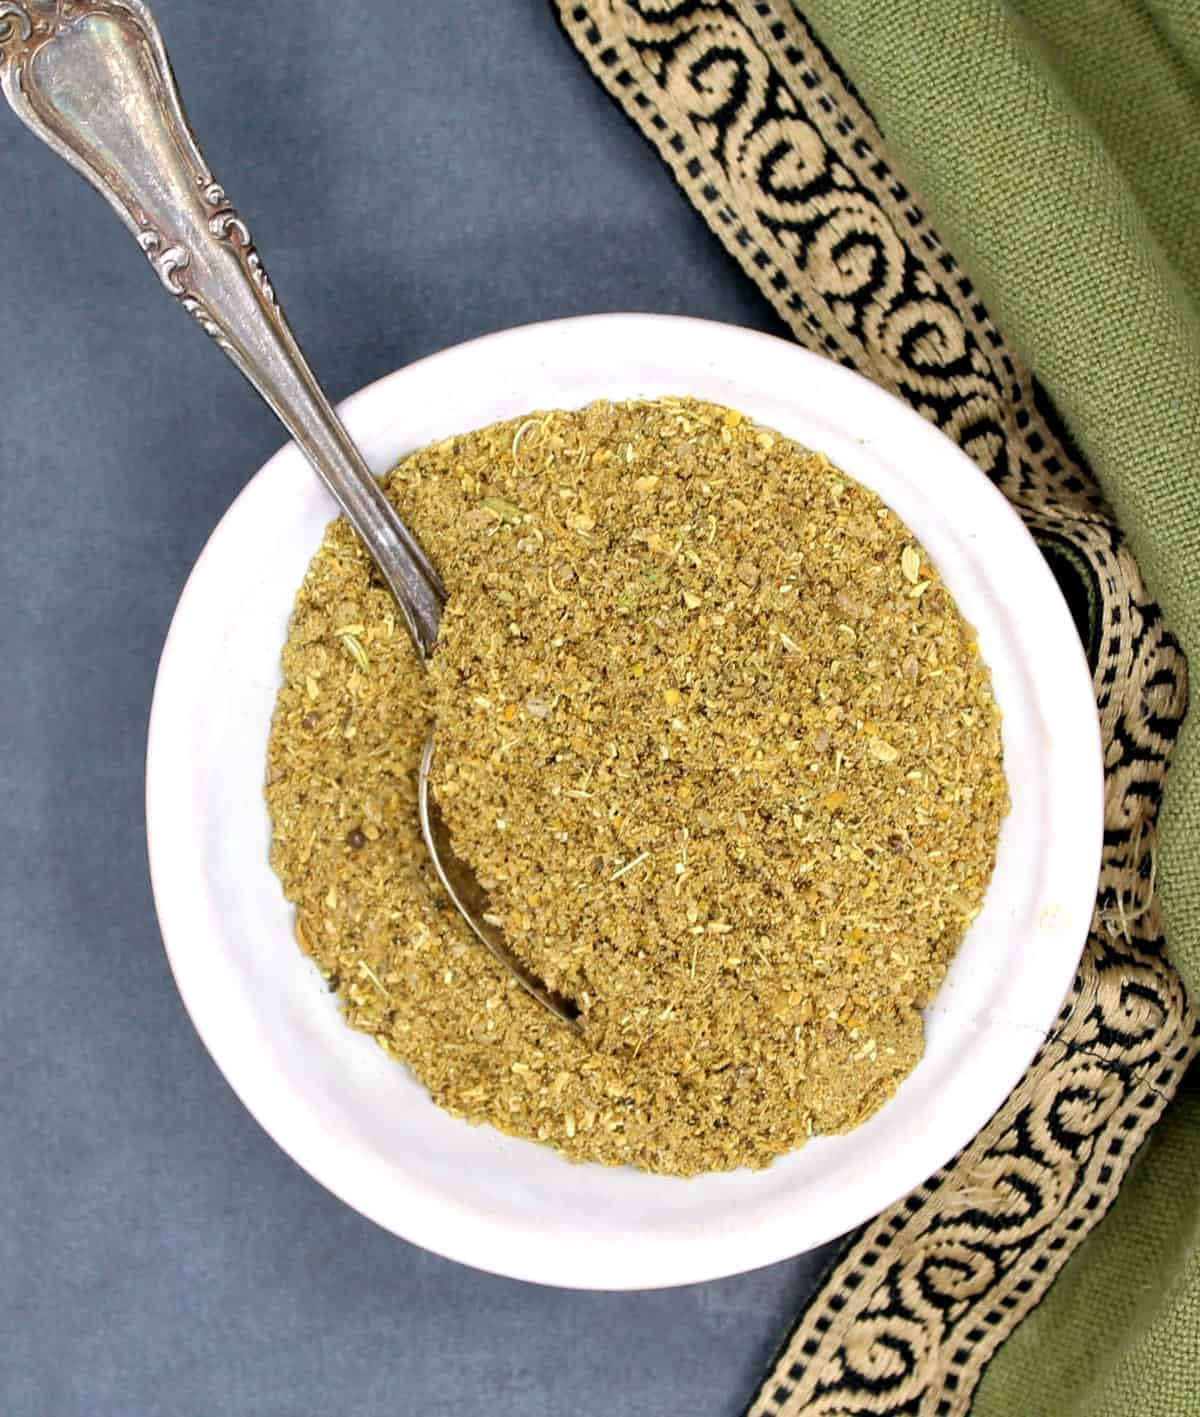 Amchar masala powder in bowl with spoon.